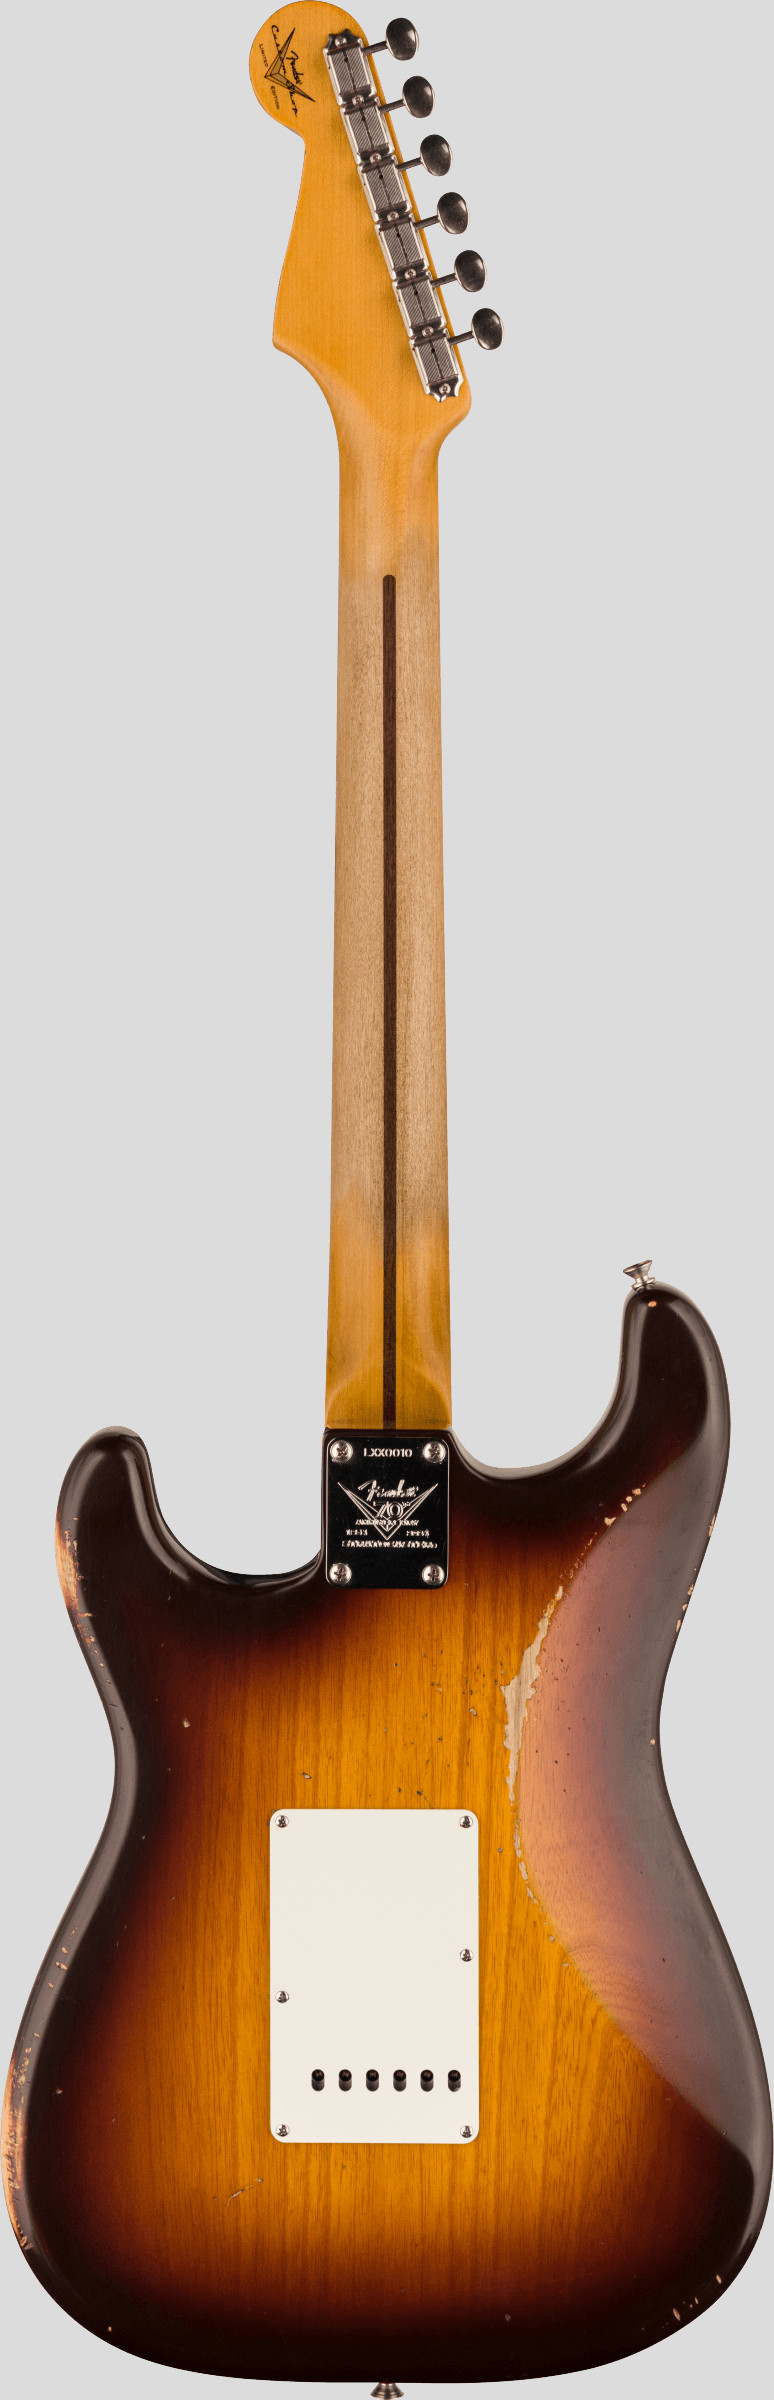 Fender Custom Shop Limited Edition Fat 1954 Stratocaster Wide-Fade Chocolate 2-Color Sunburst Relic 2